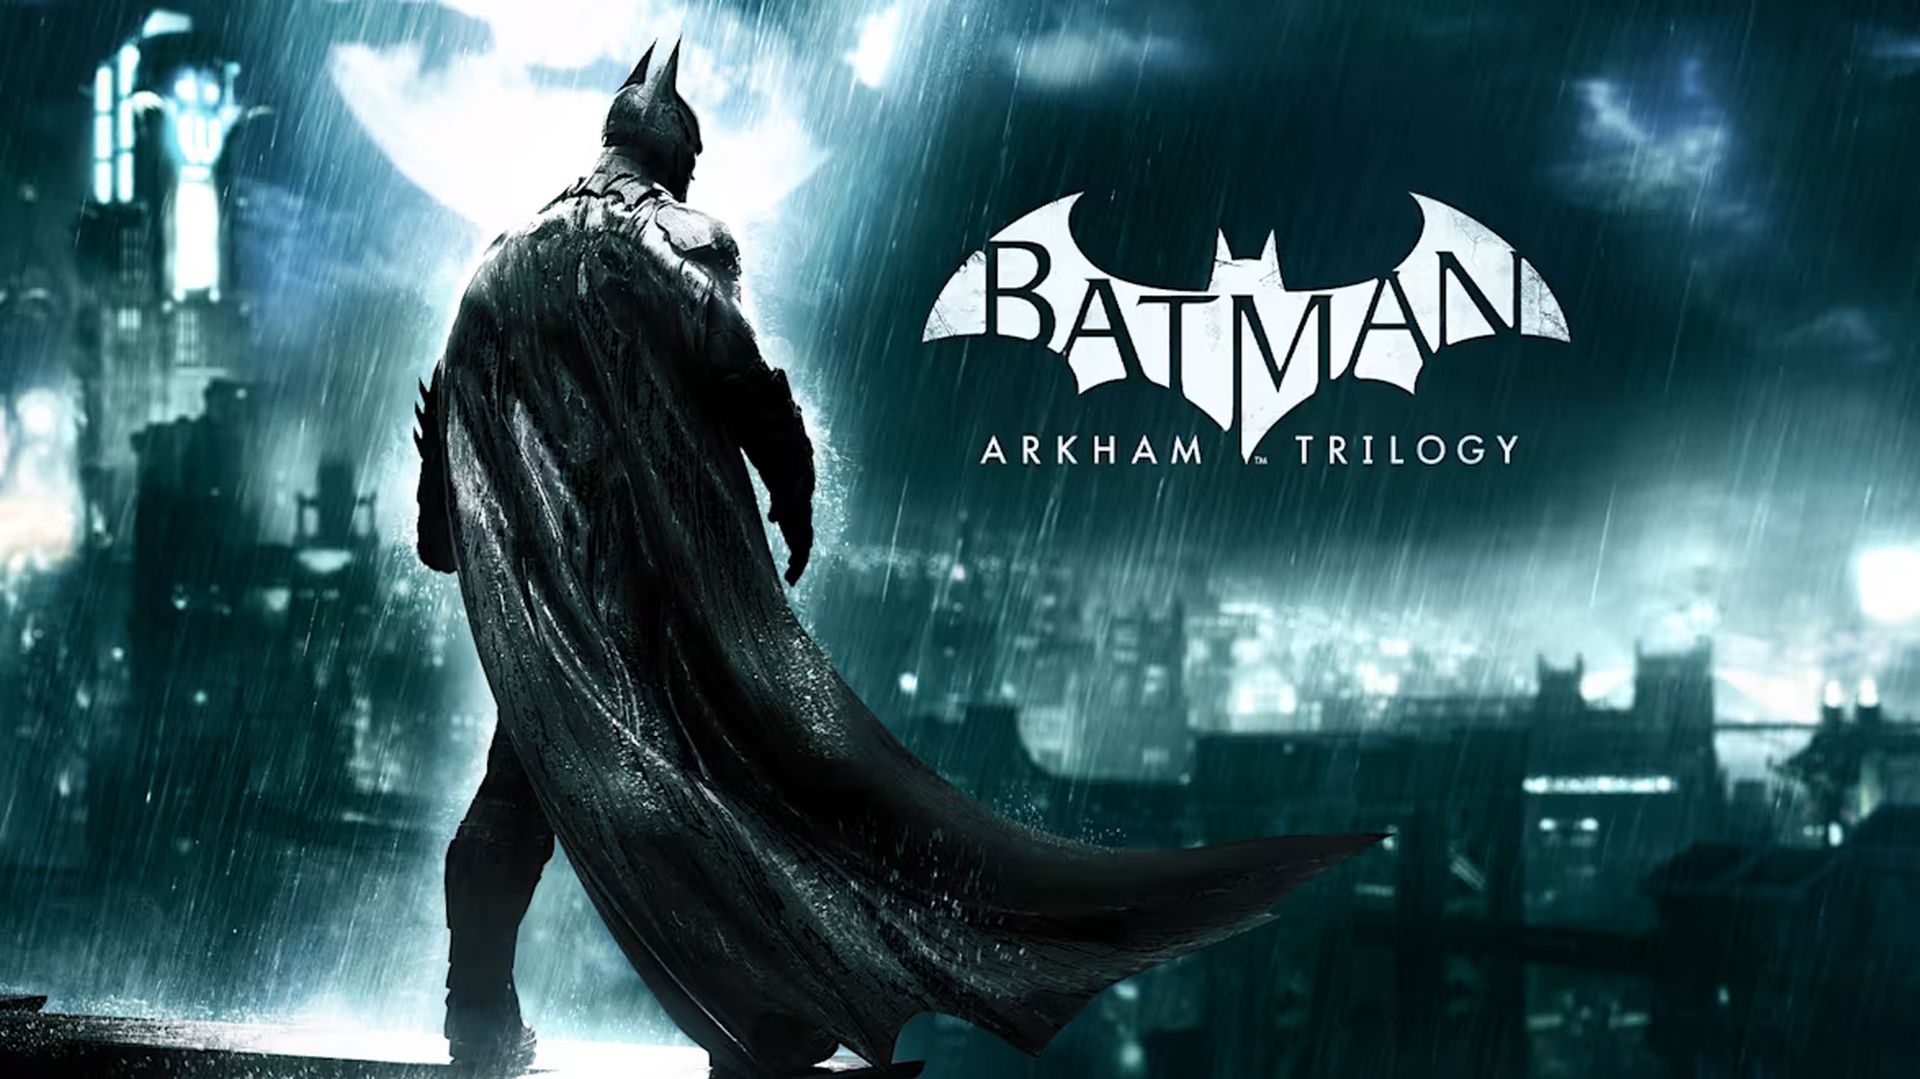 Arkham Trilogy – The Batman Suit is a 2-Week Exclusive on Nintendo Switch